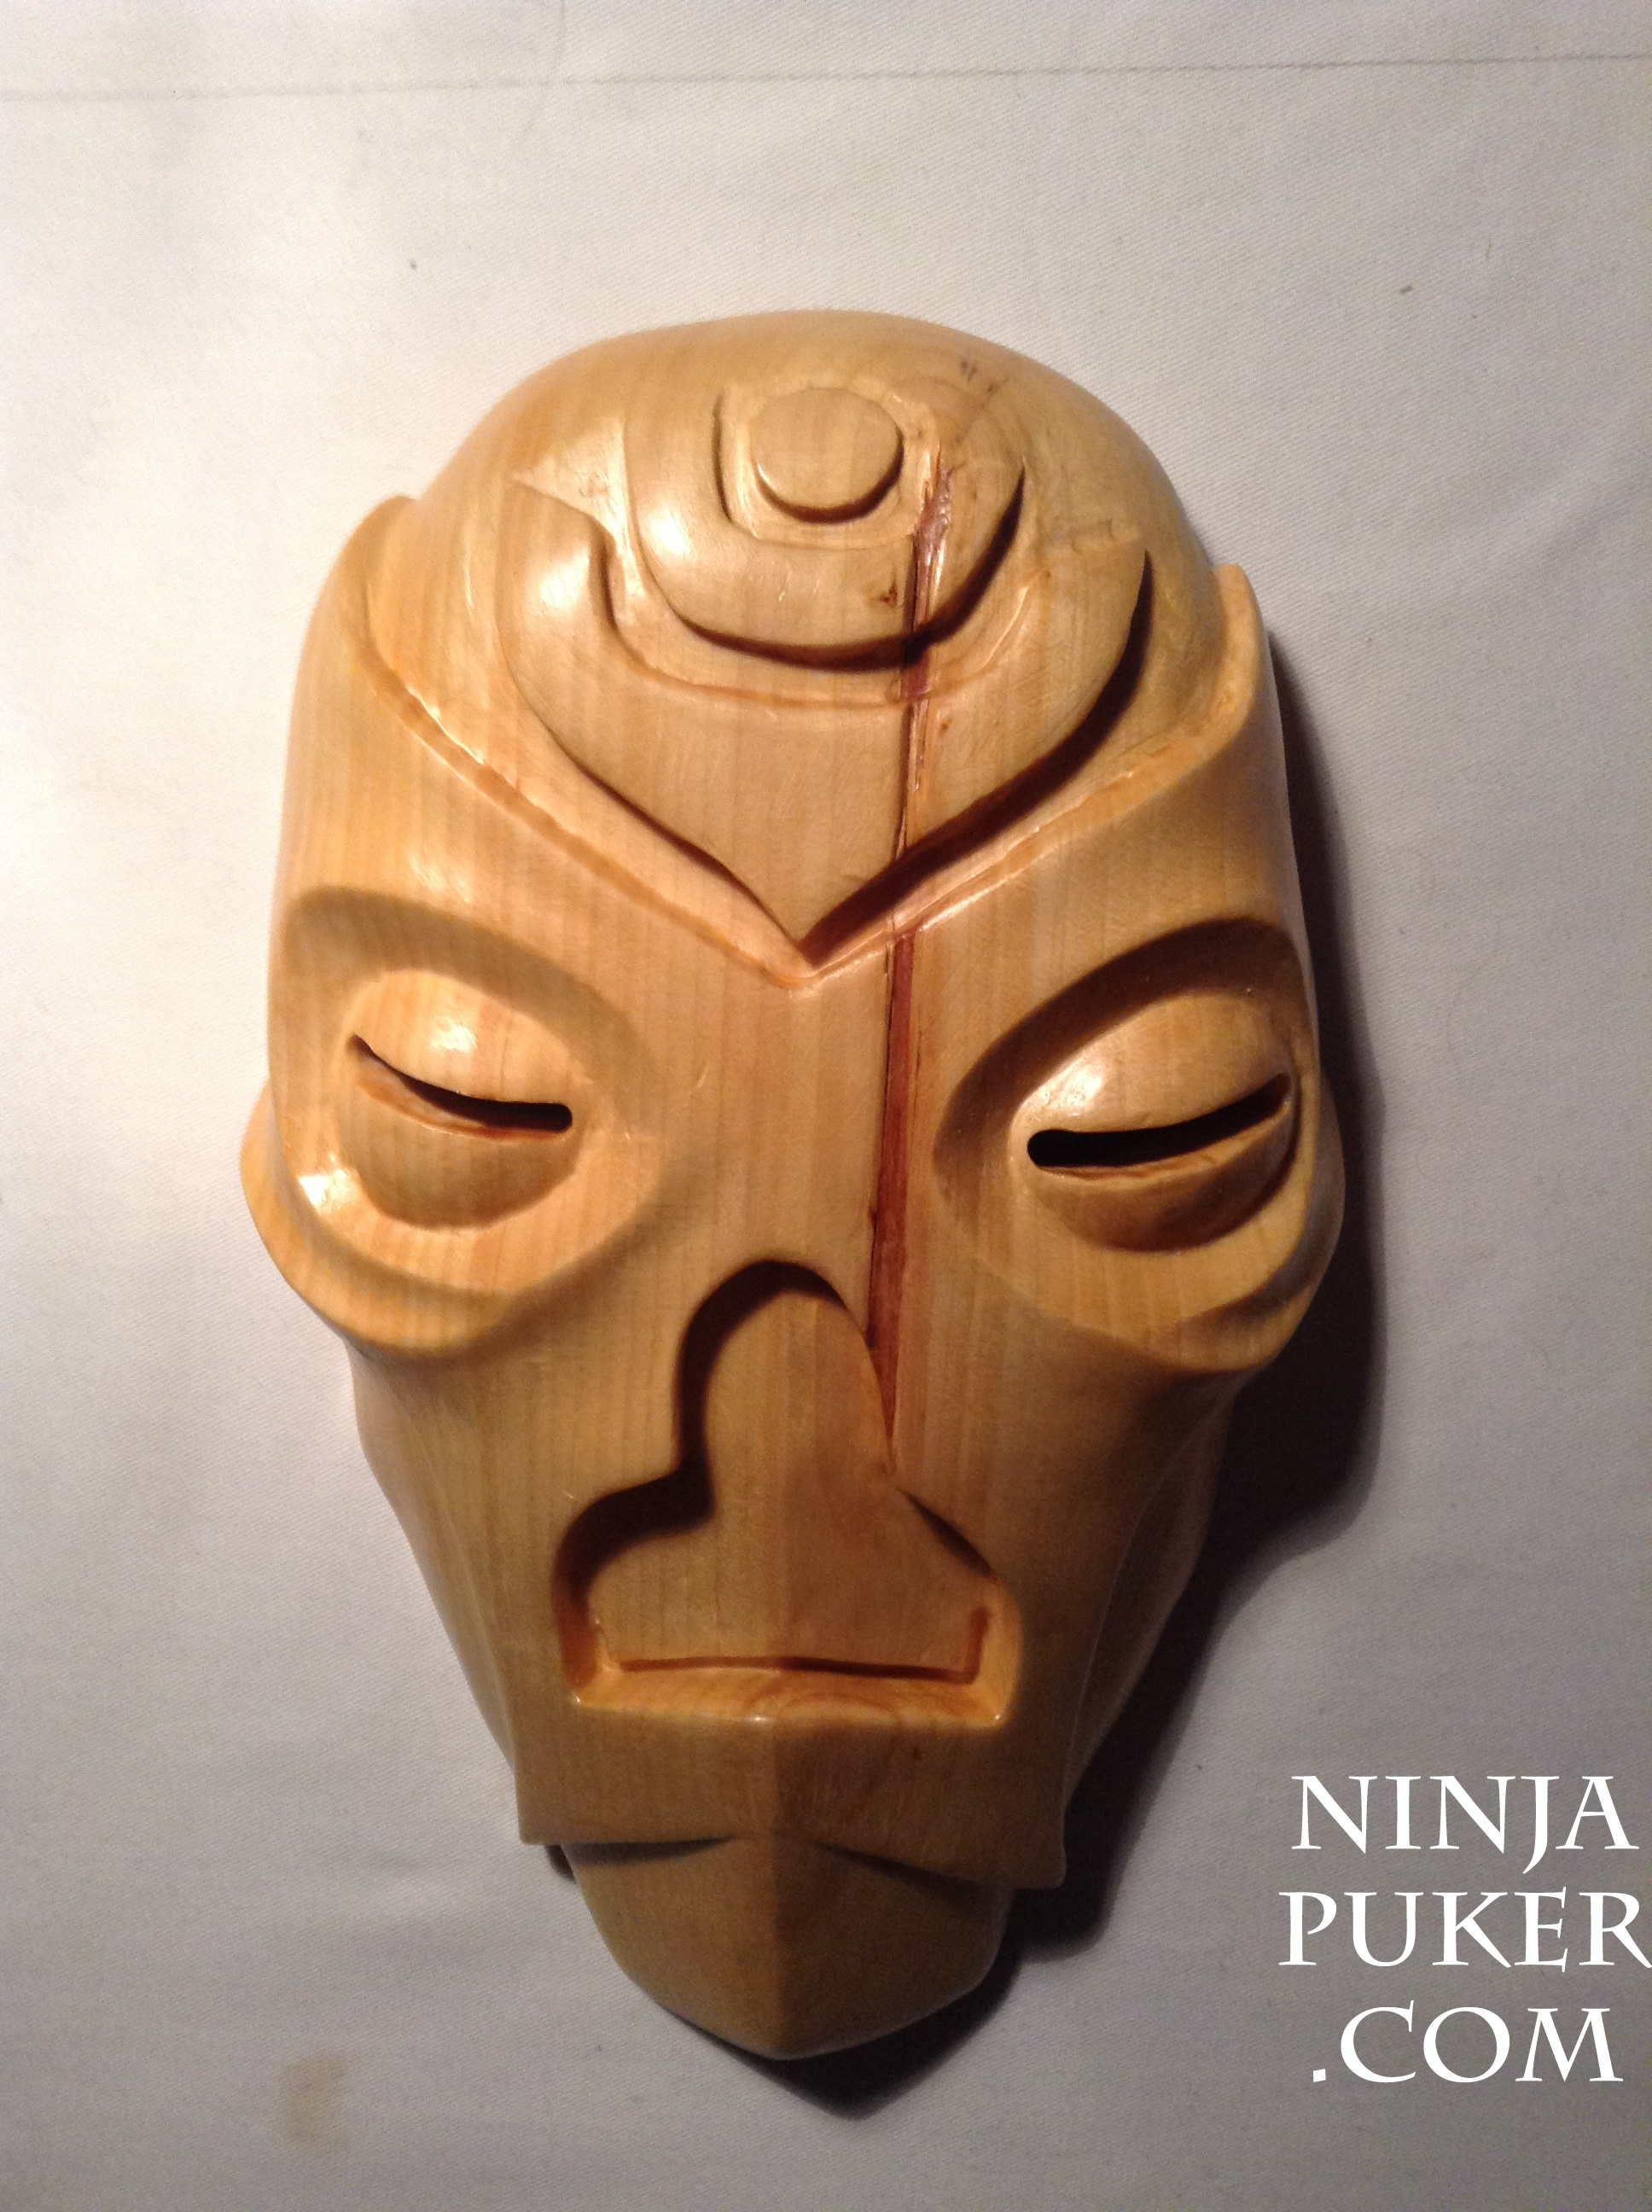 Skyrim's Wooden Mask - Album on Imgur